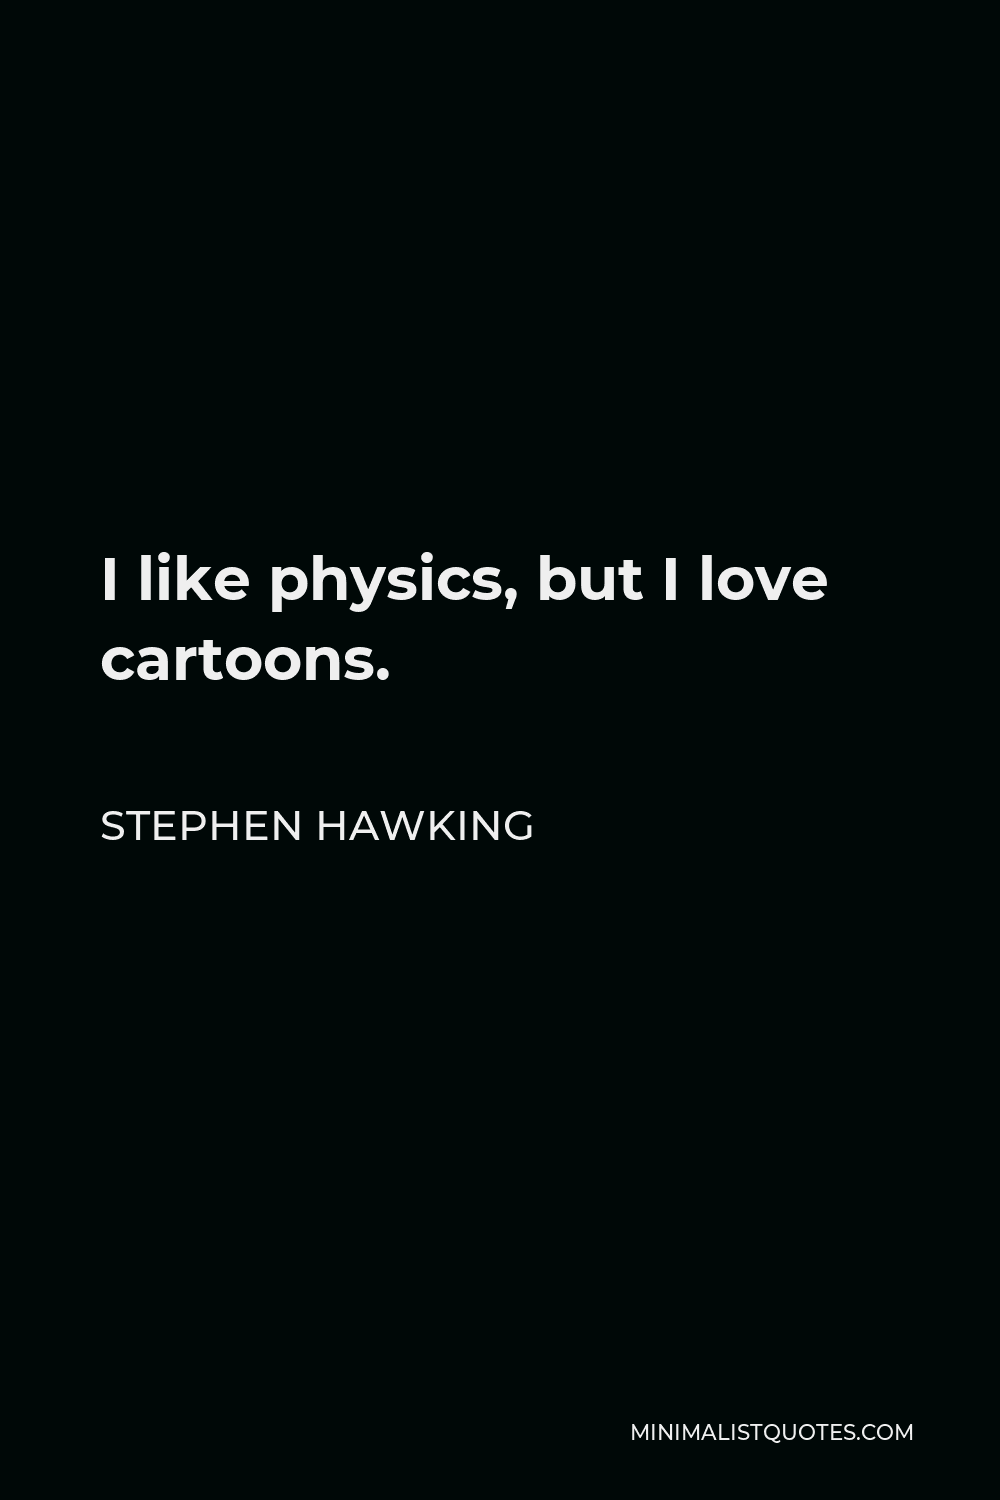 Stephen Hawking Quote - I like physics, but I love cartoons.